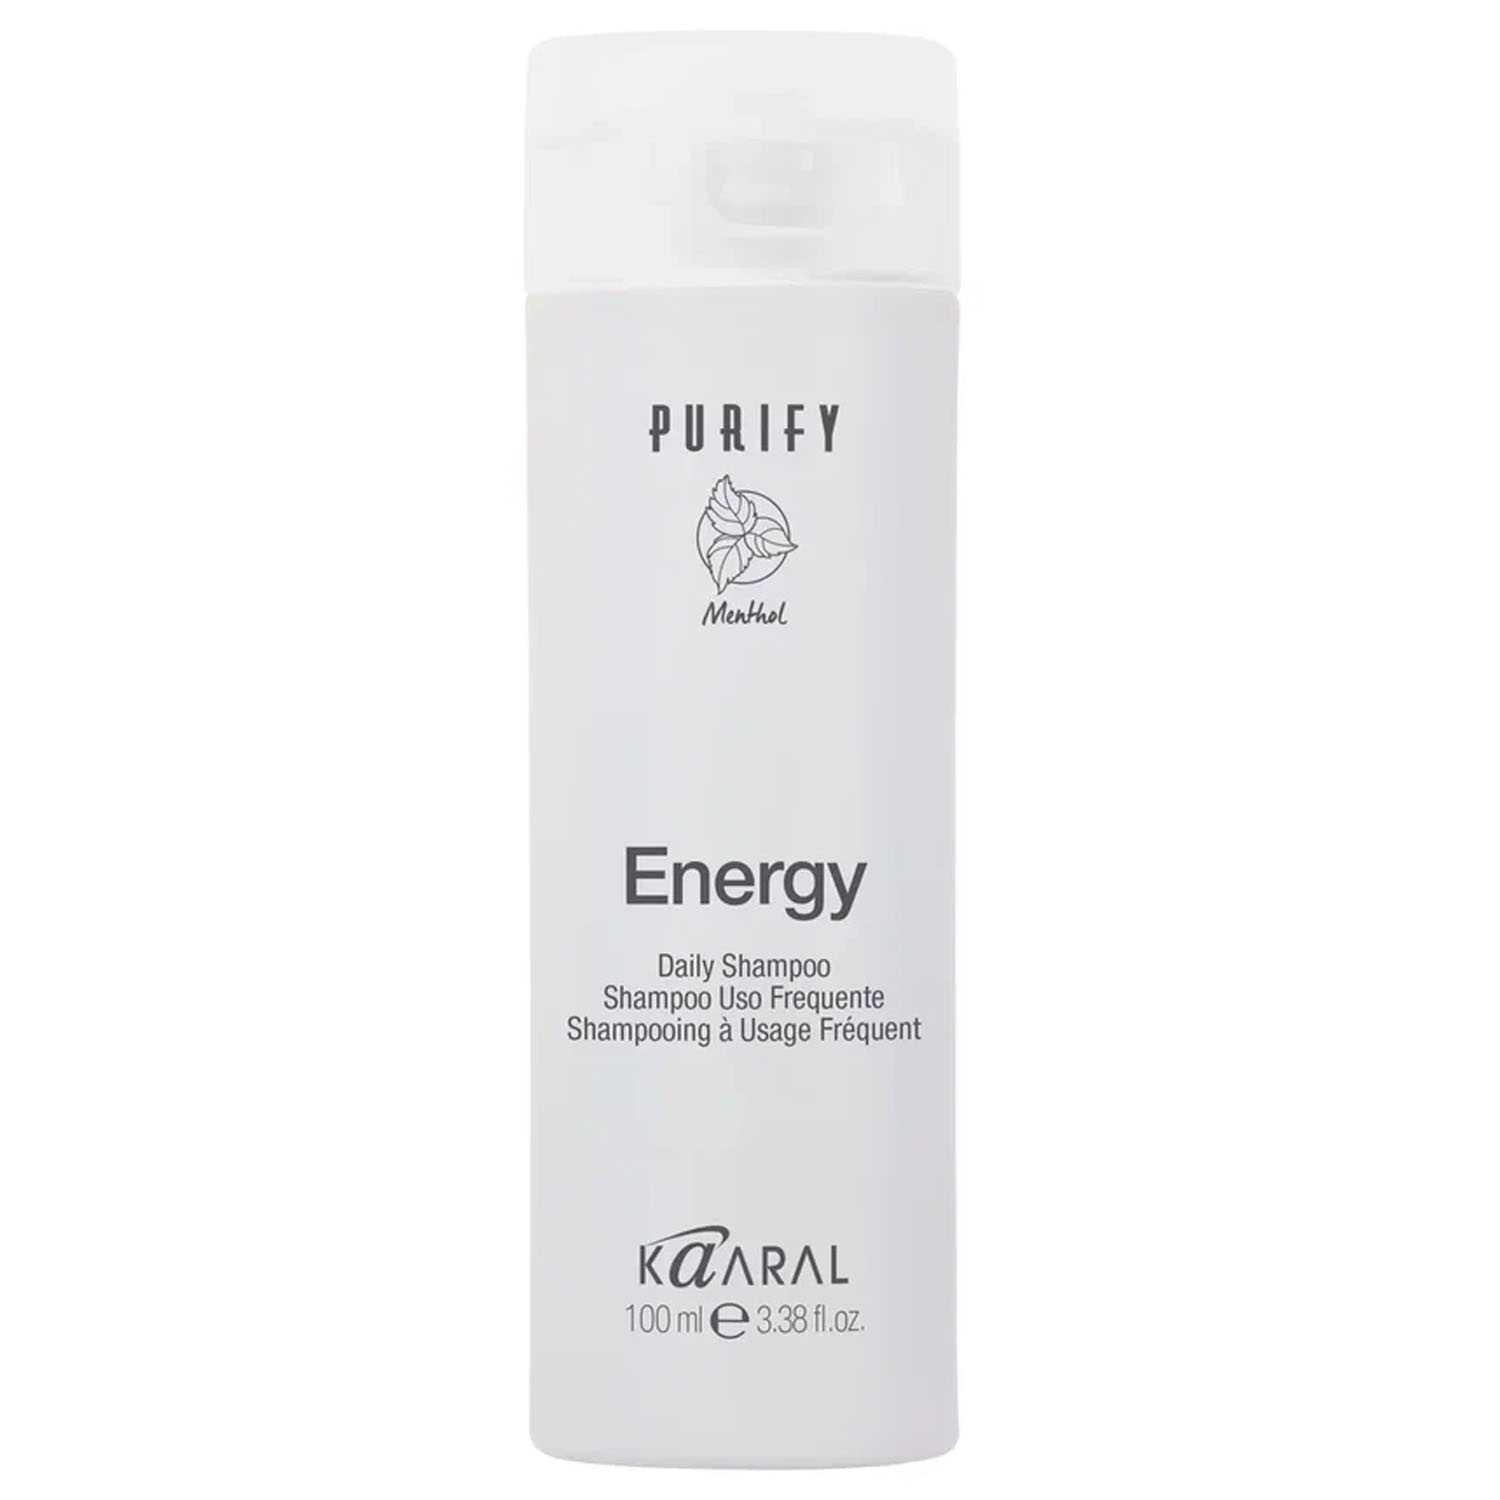 Kaaral Интенсивный энергетический шампунь с ментолом Daily Purify Energy Shampoo, 100 мл (Kaaral, Purify)